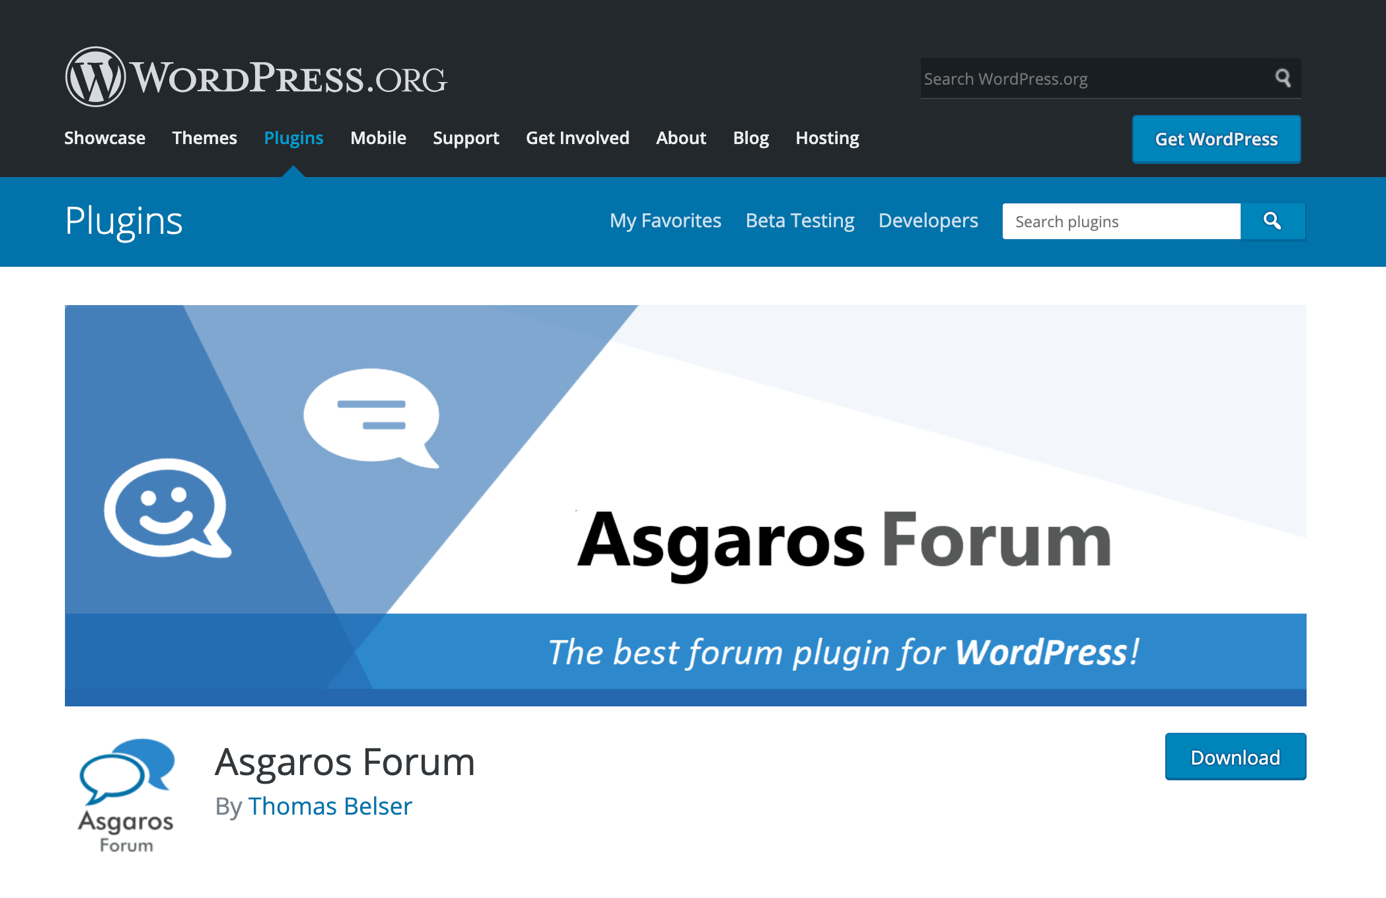 Download page for Asgaros Forum on WordPress.org